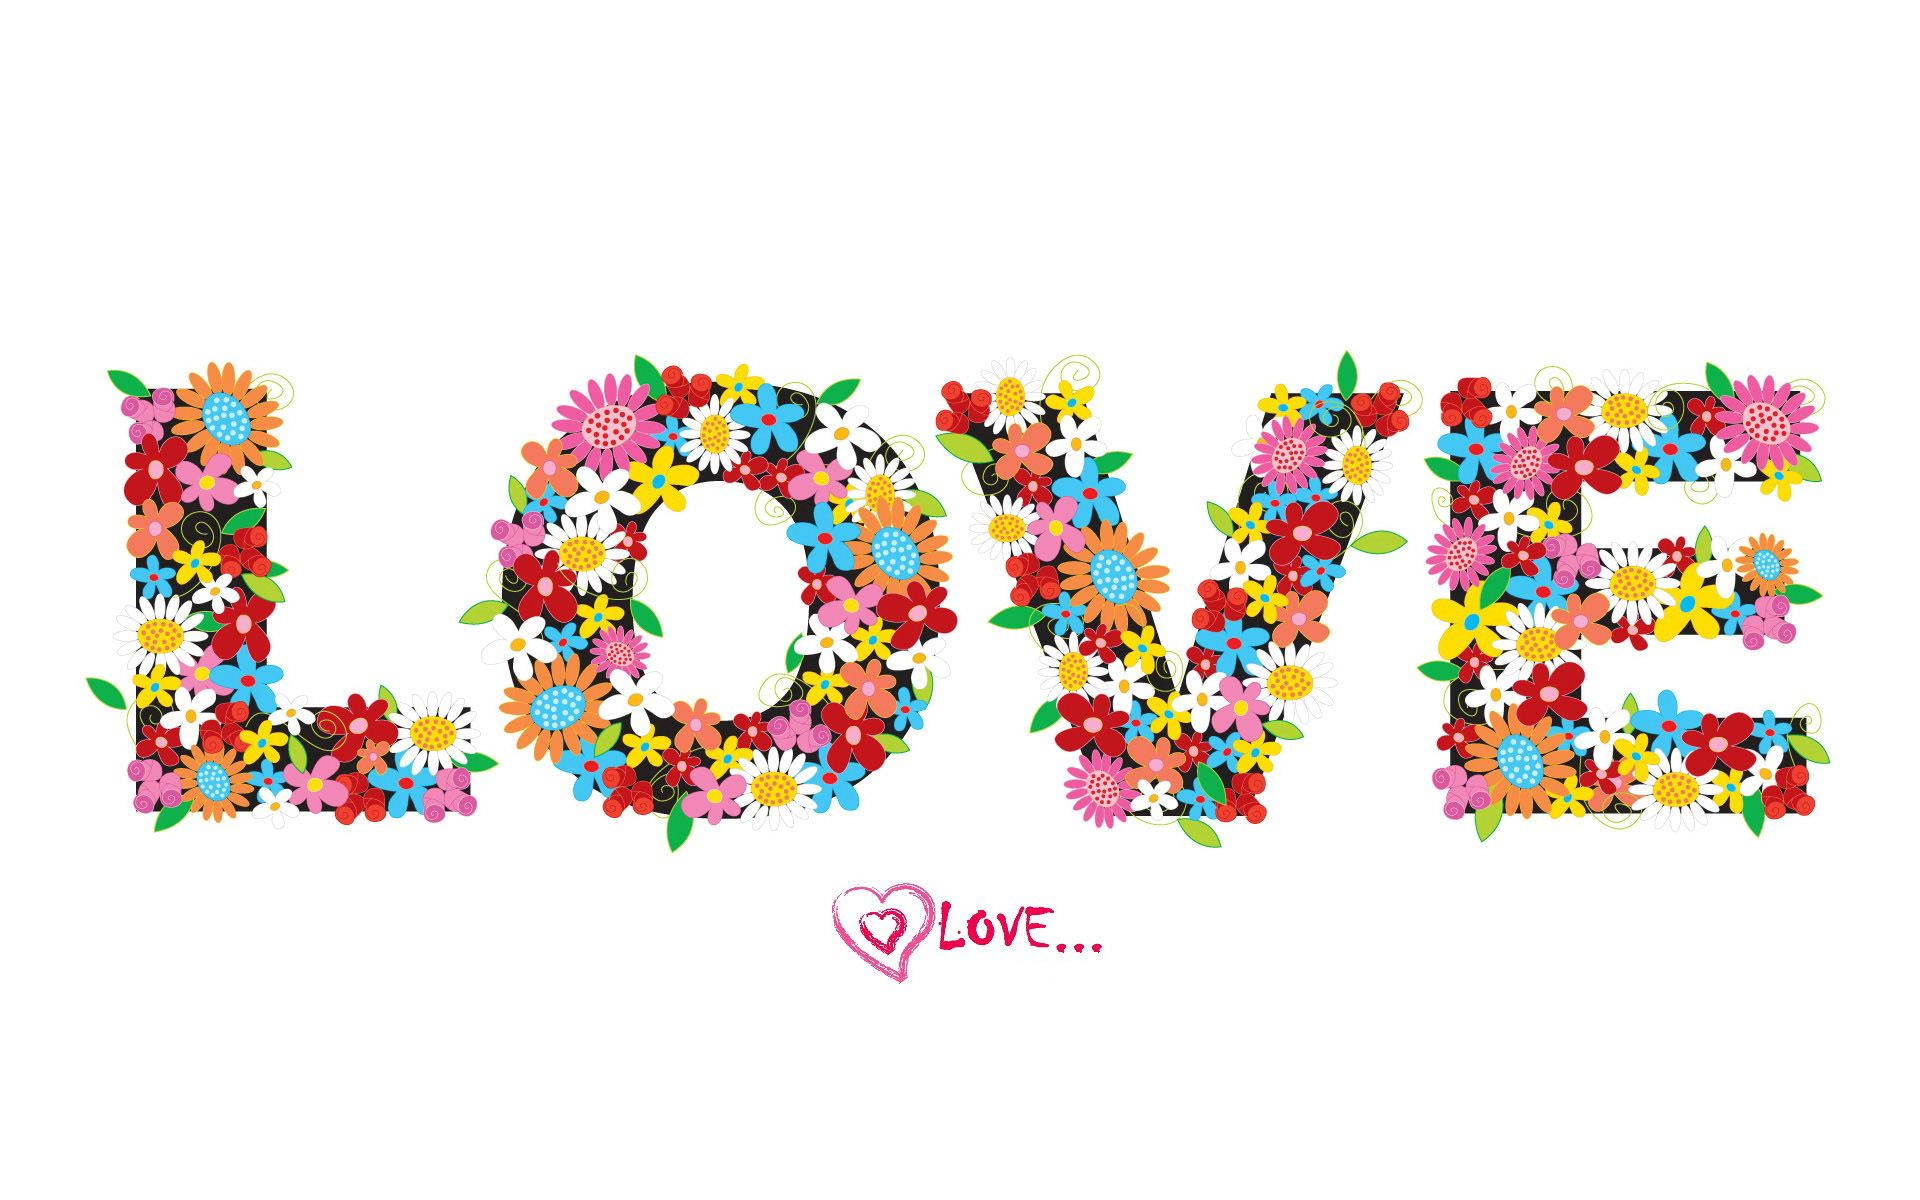 Love Inscription Using Flowers Wallpaper